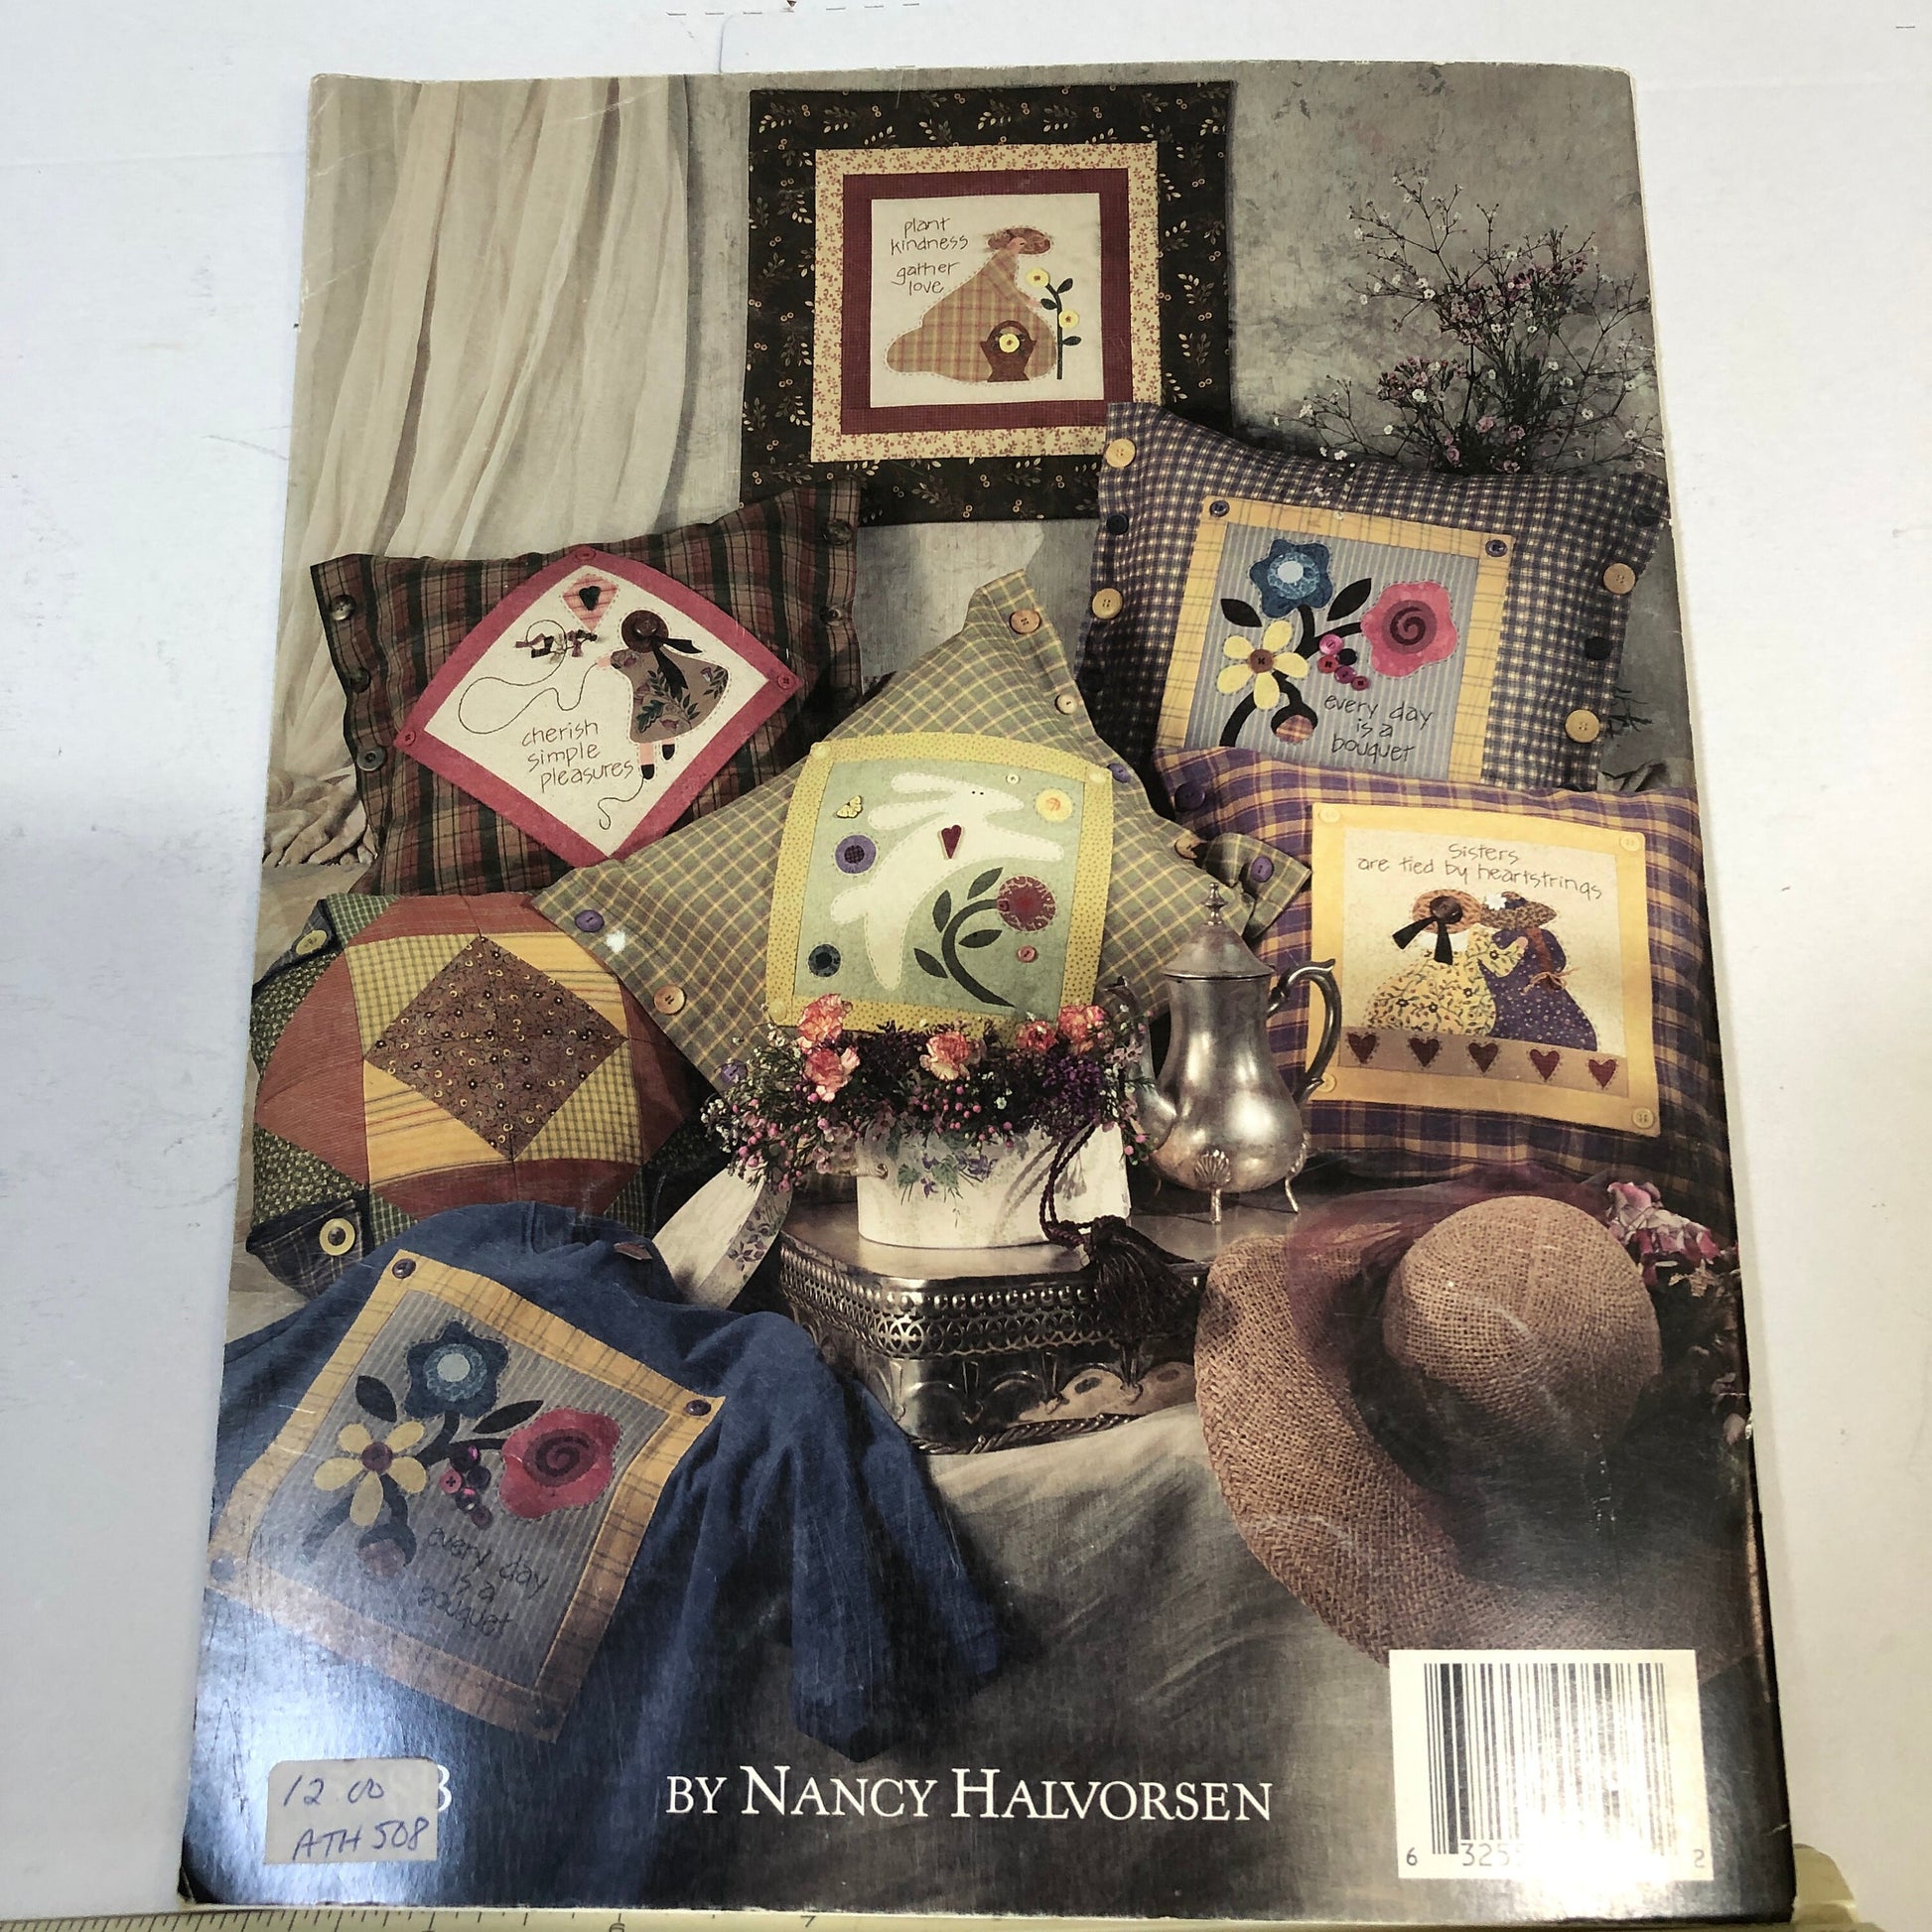 Art To Heart, Pillow Talk, Nancy Halvorsen, Vintage 1998, Applique/Quilting Design Booklet